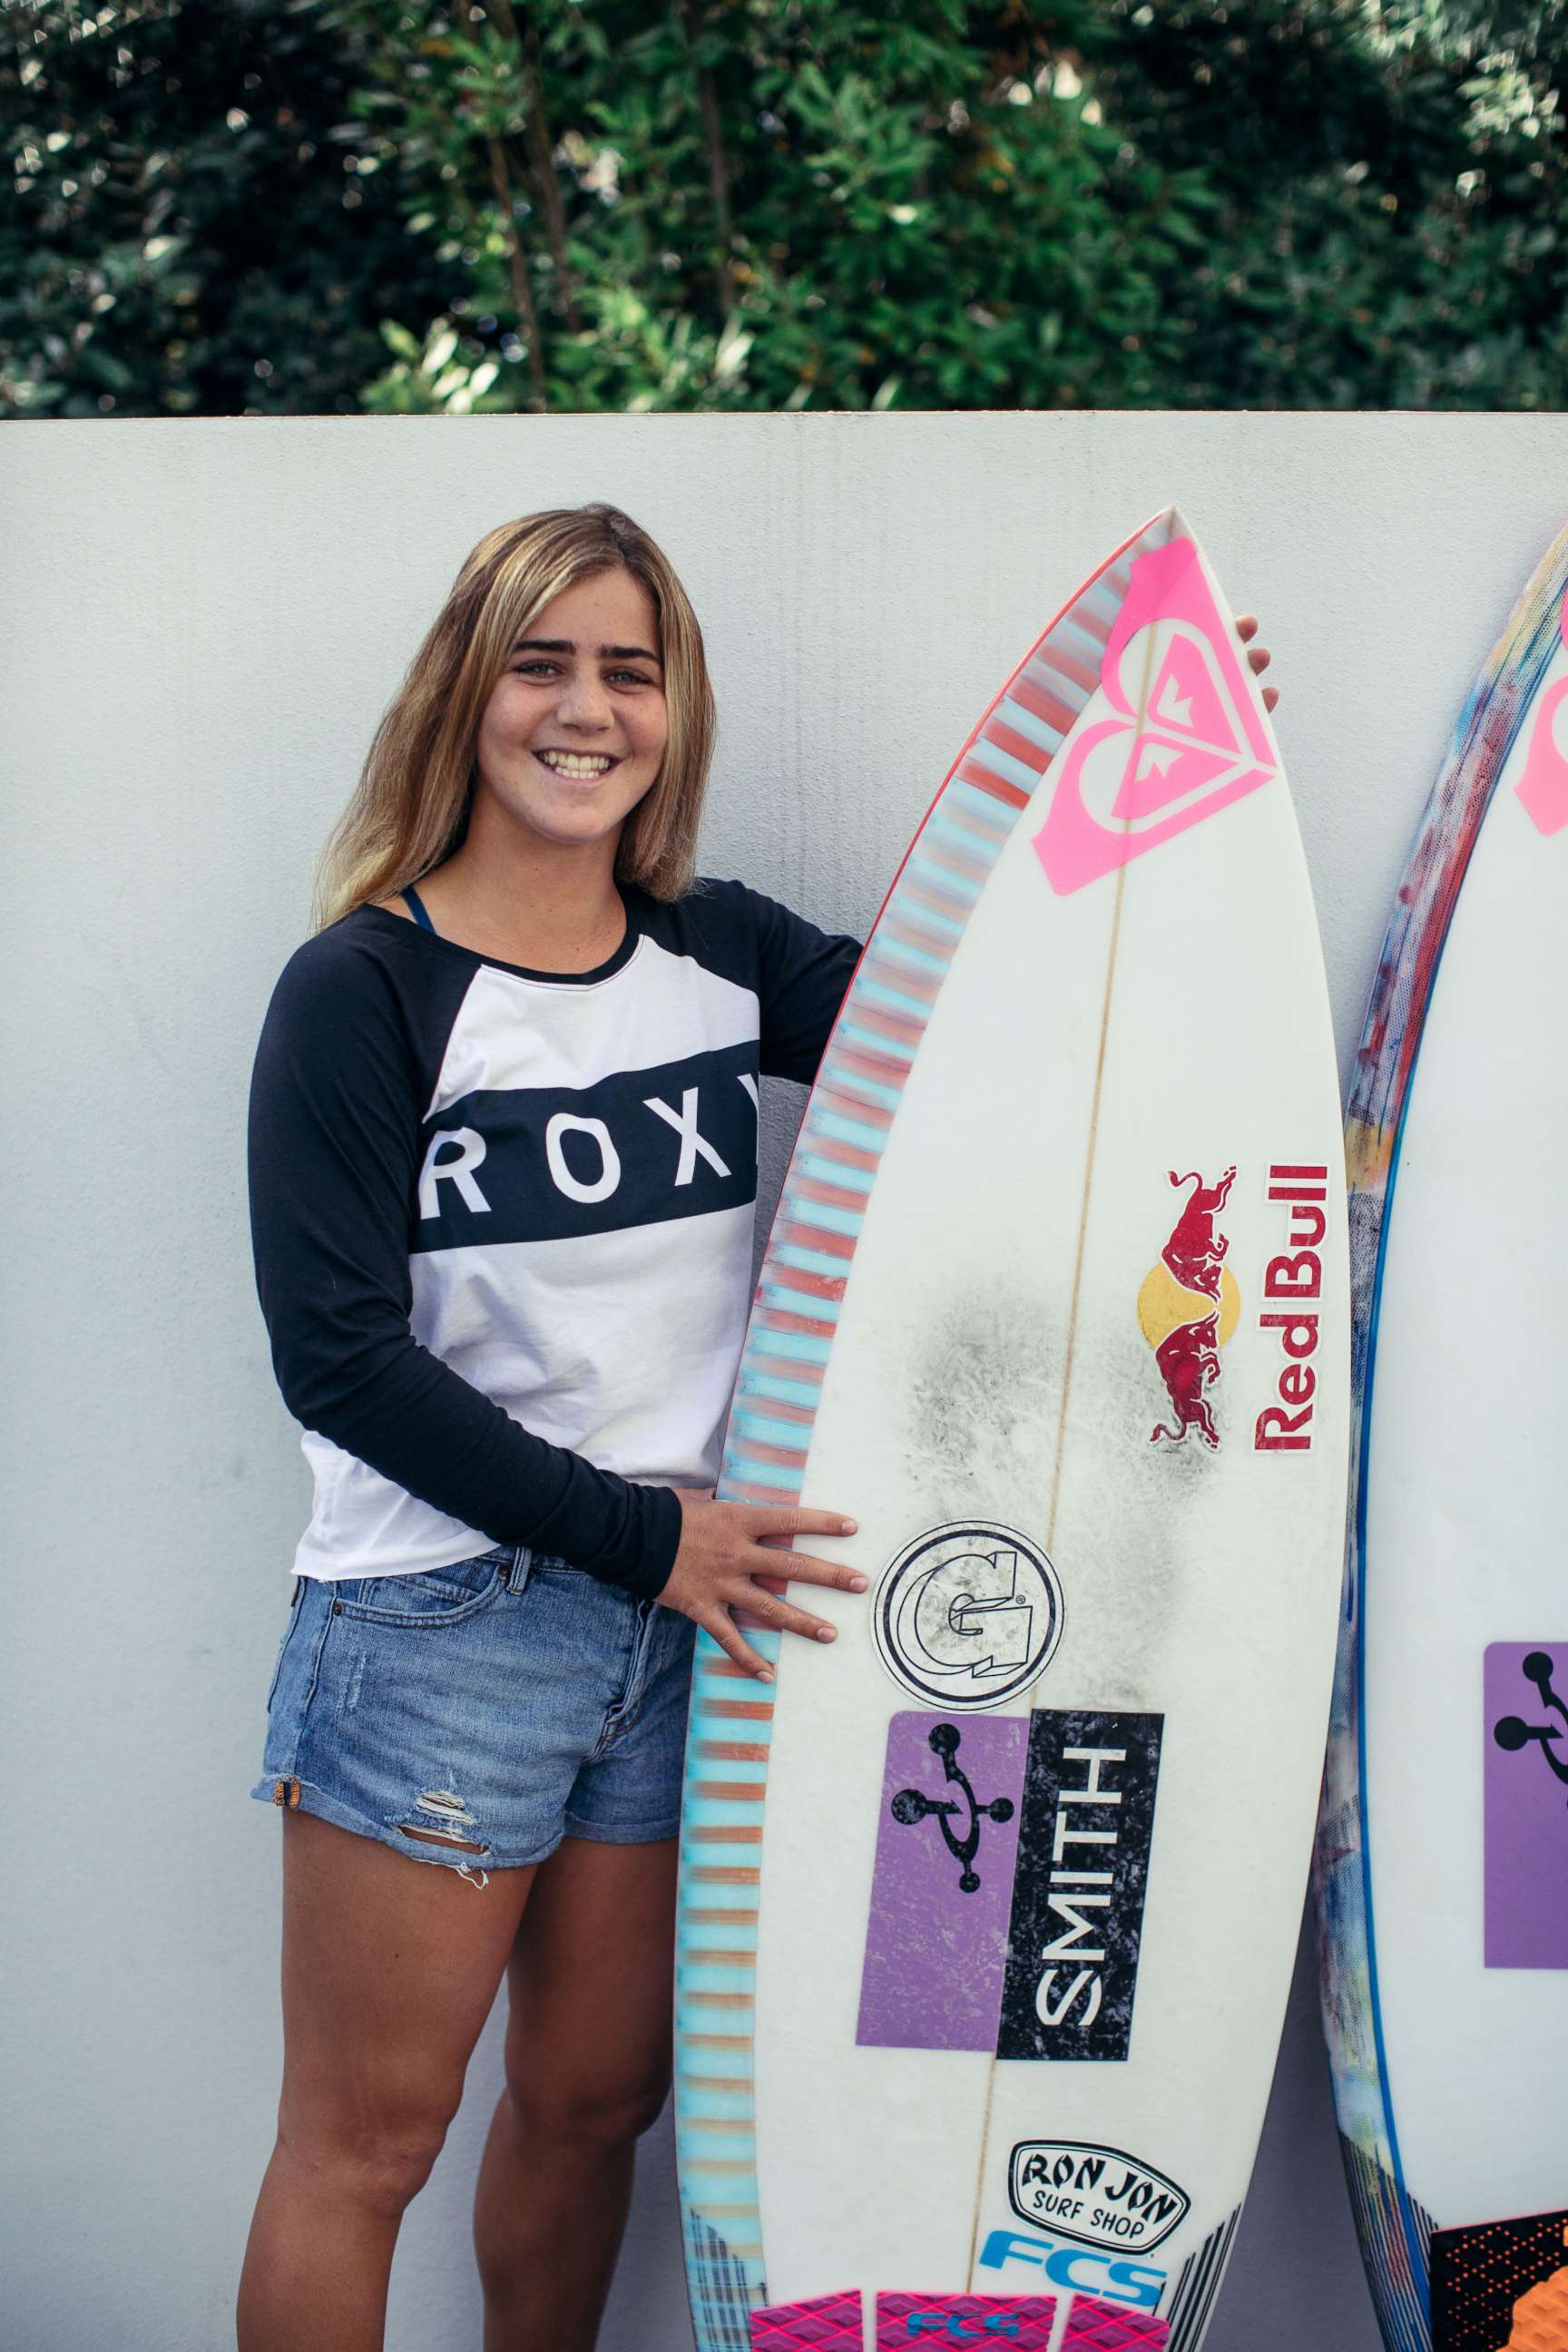 PHOTO: Caroline Marks with her Roxy surfboard. 